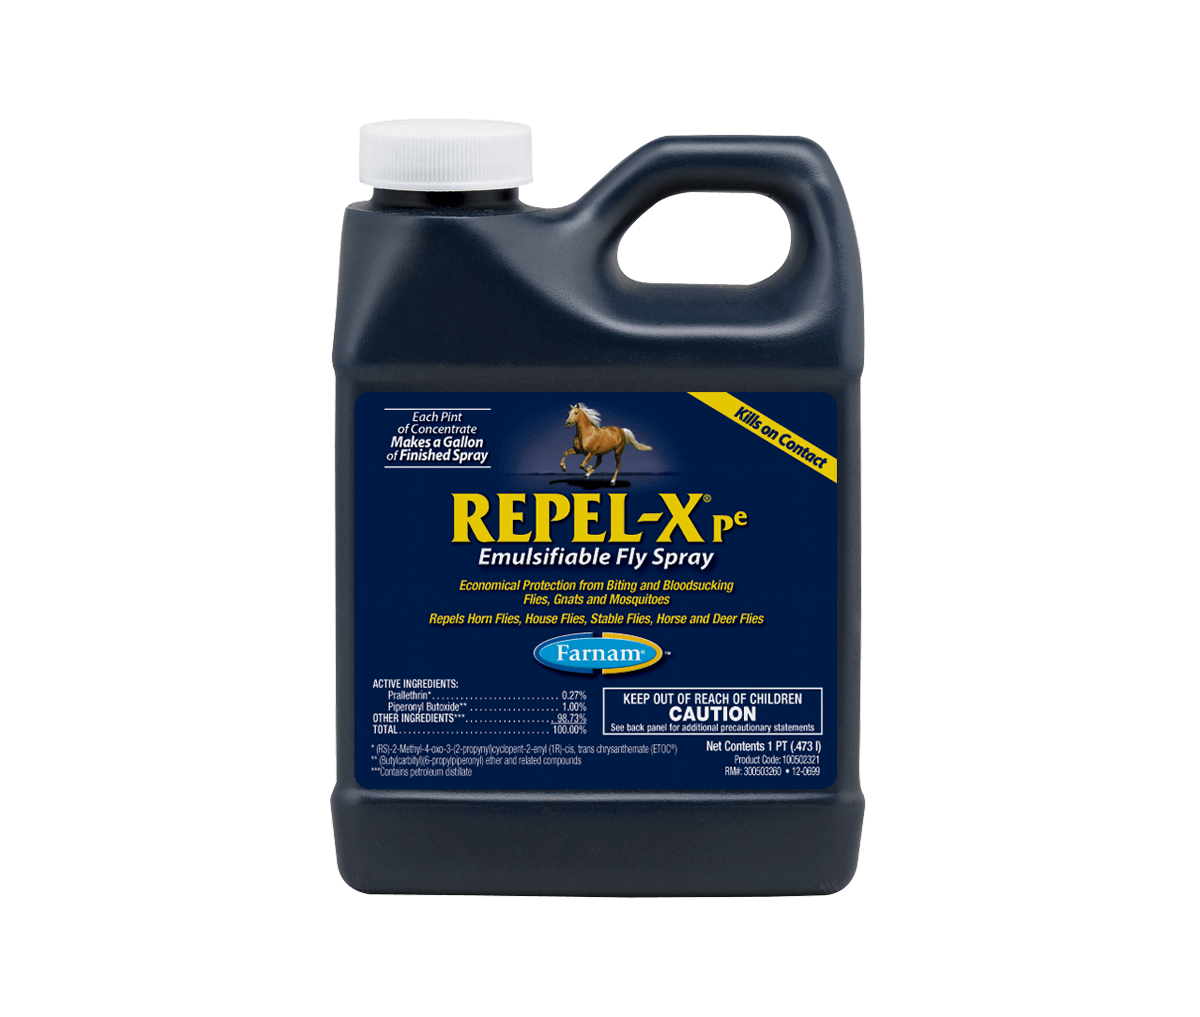 Repel-X® pe Emulsifiable Fly Spray, 16 oz.